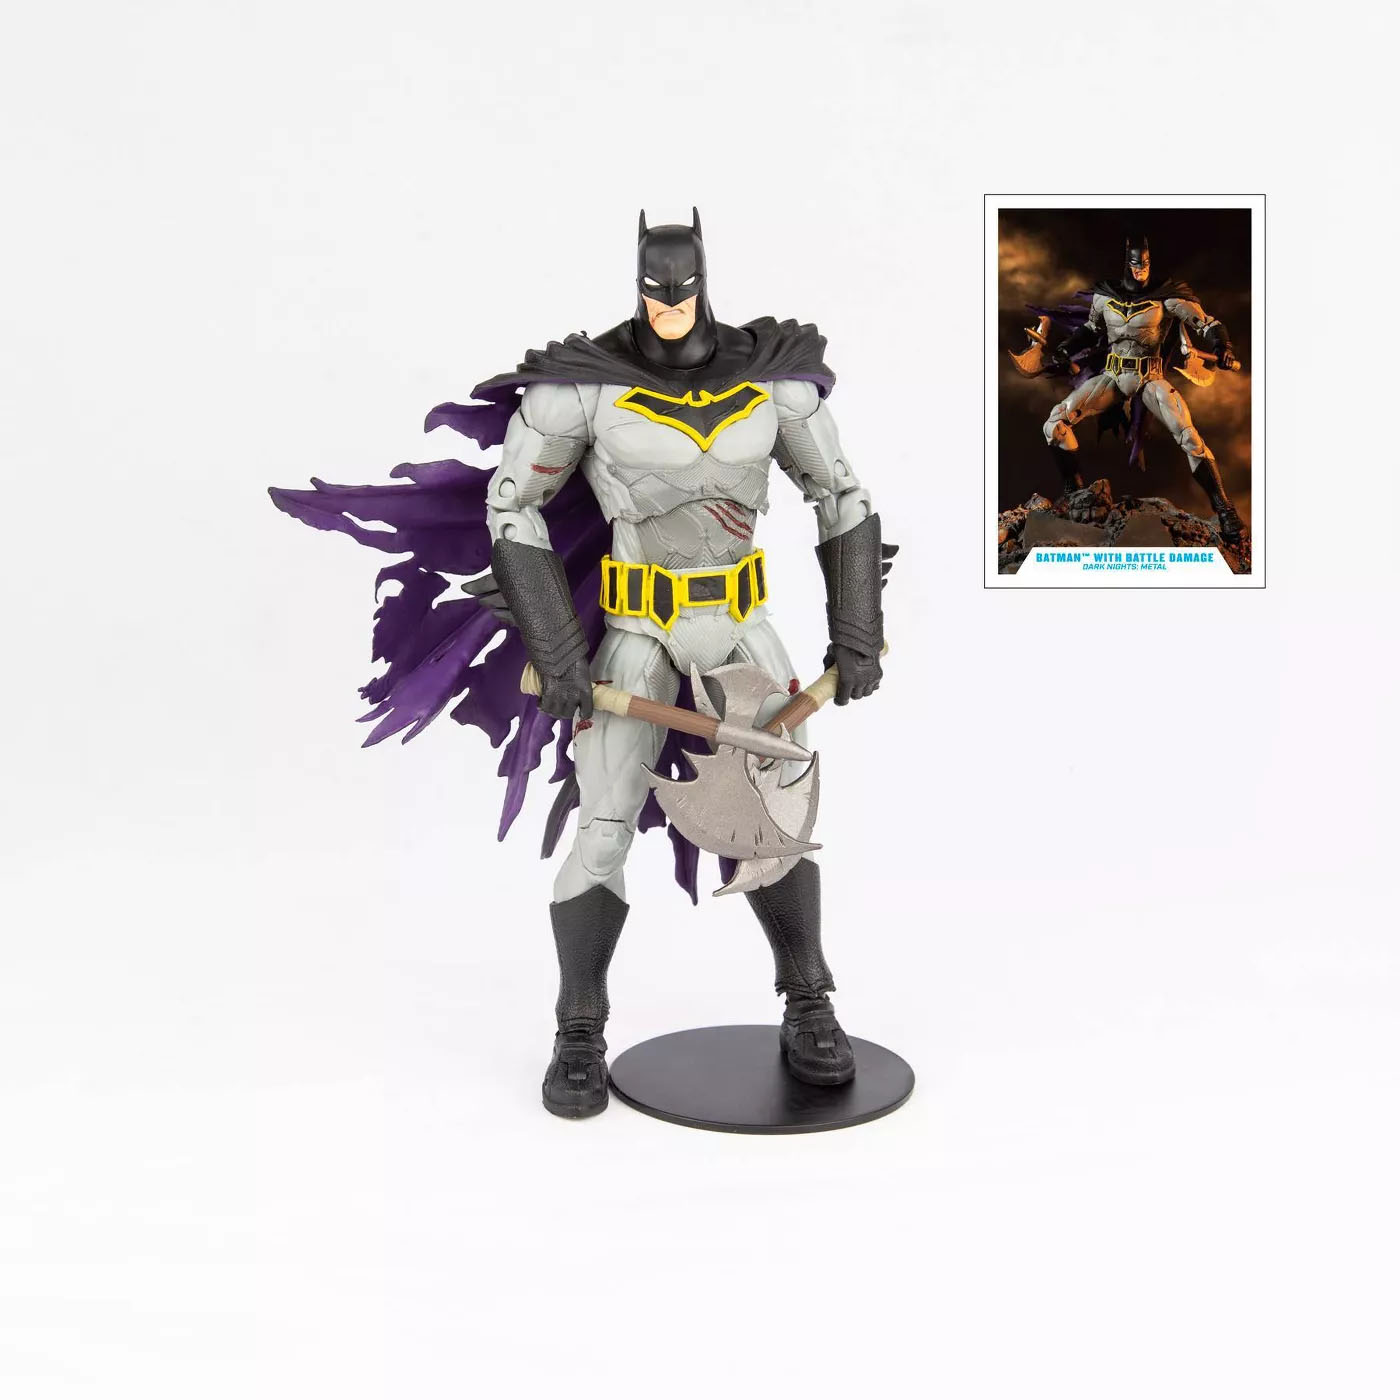 McFarlane-Heavy-Metal-Batman-Cover-Edition-001.jpg